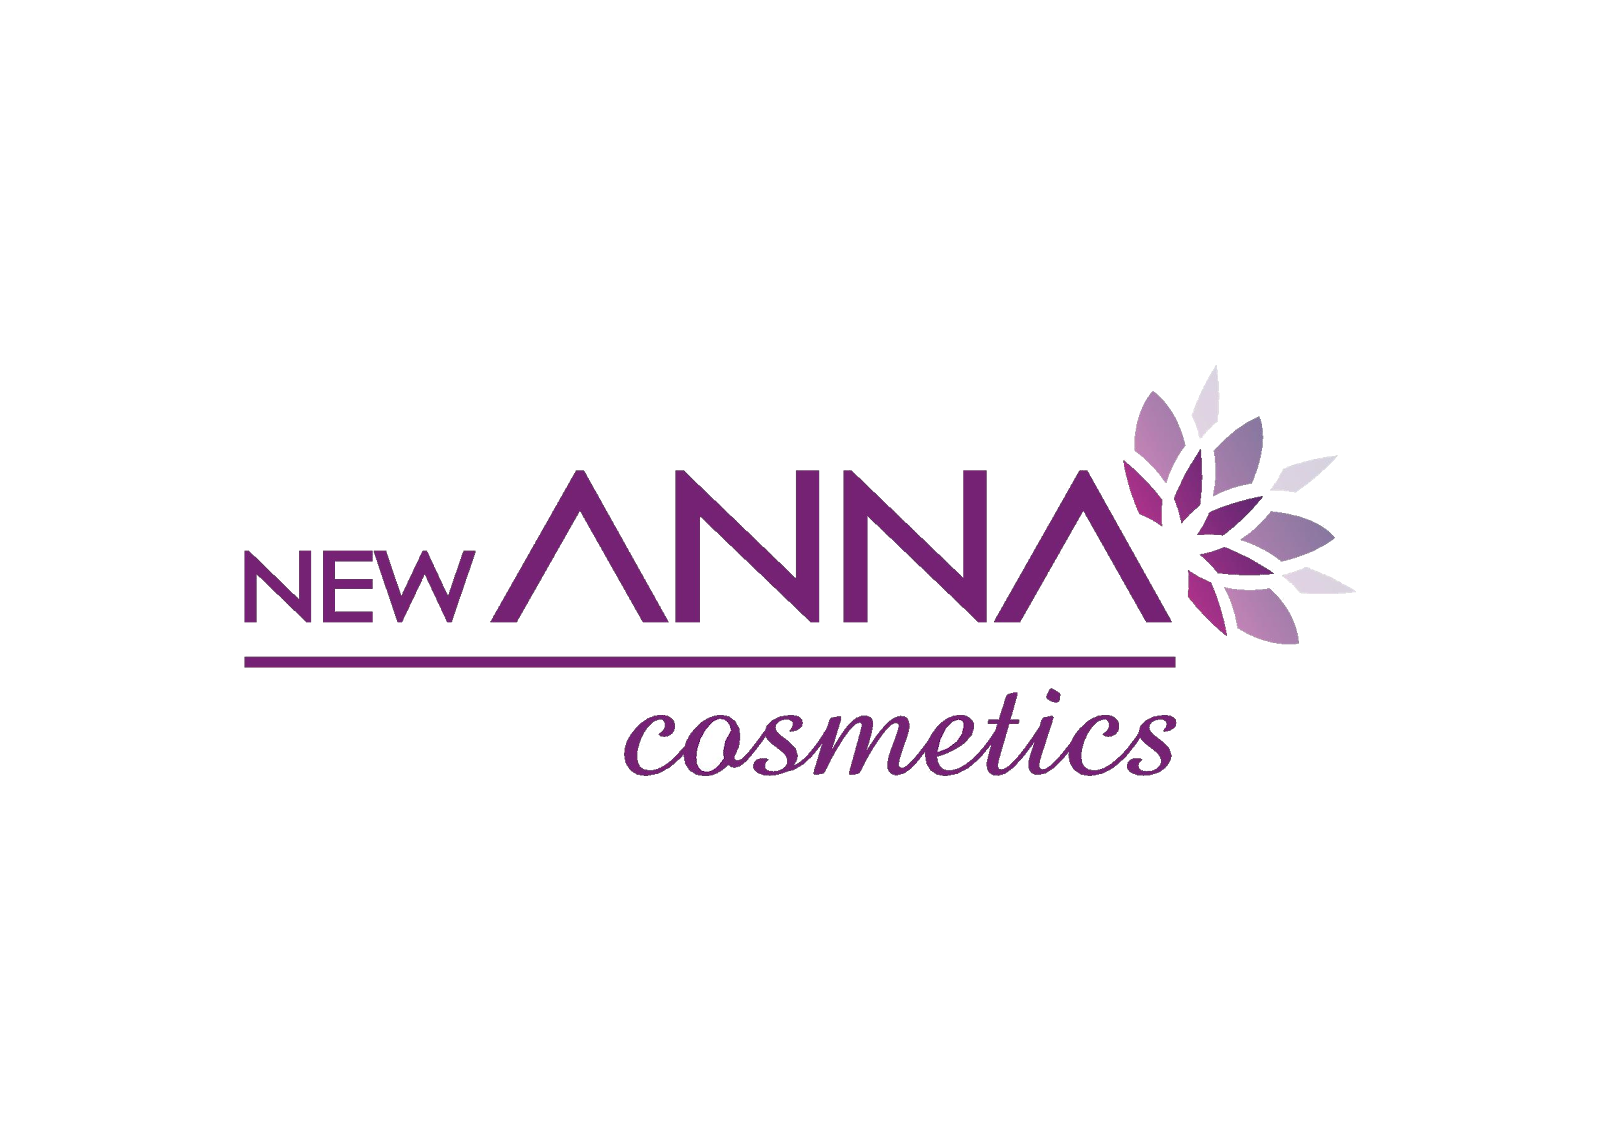 New Anna Cosmetics